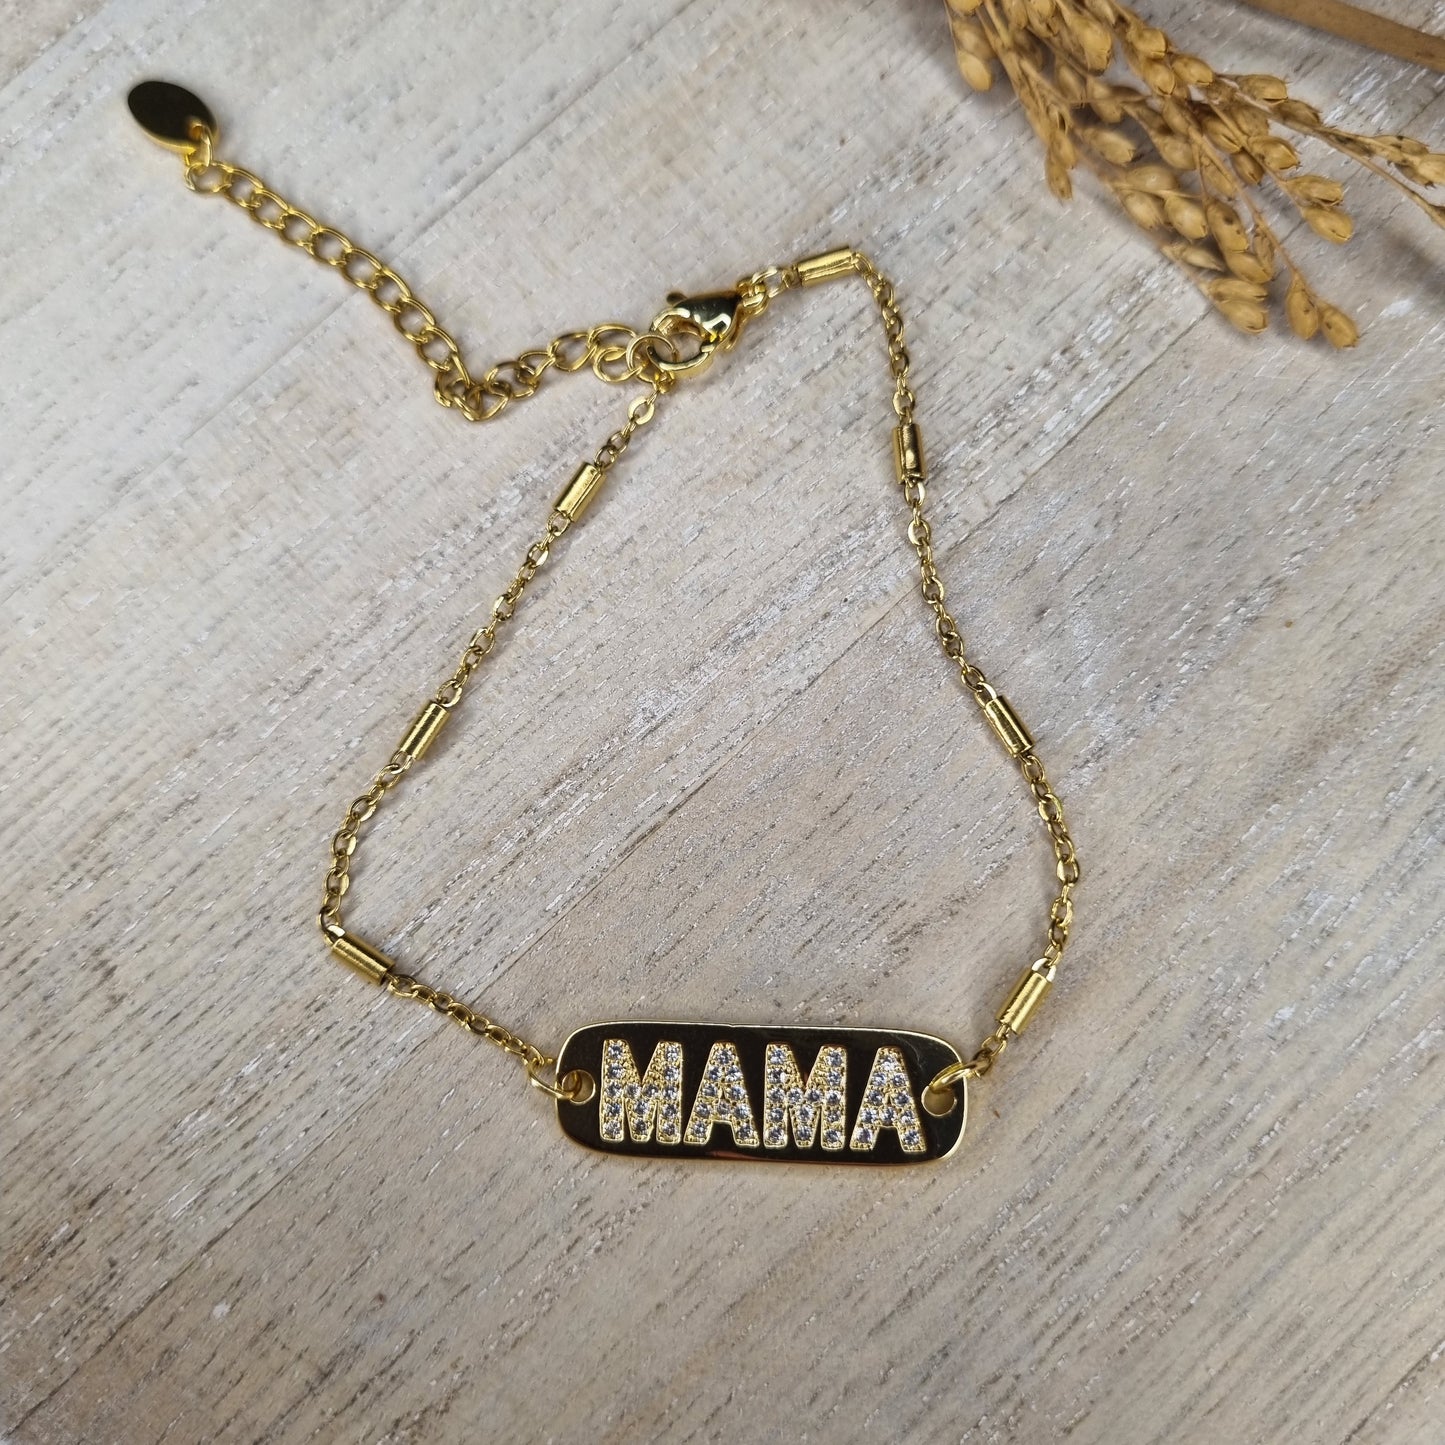 Mama Charm Bracelet